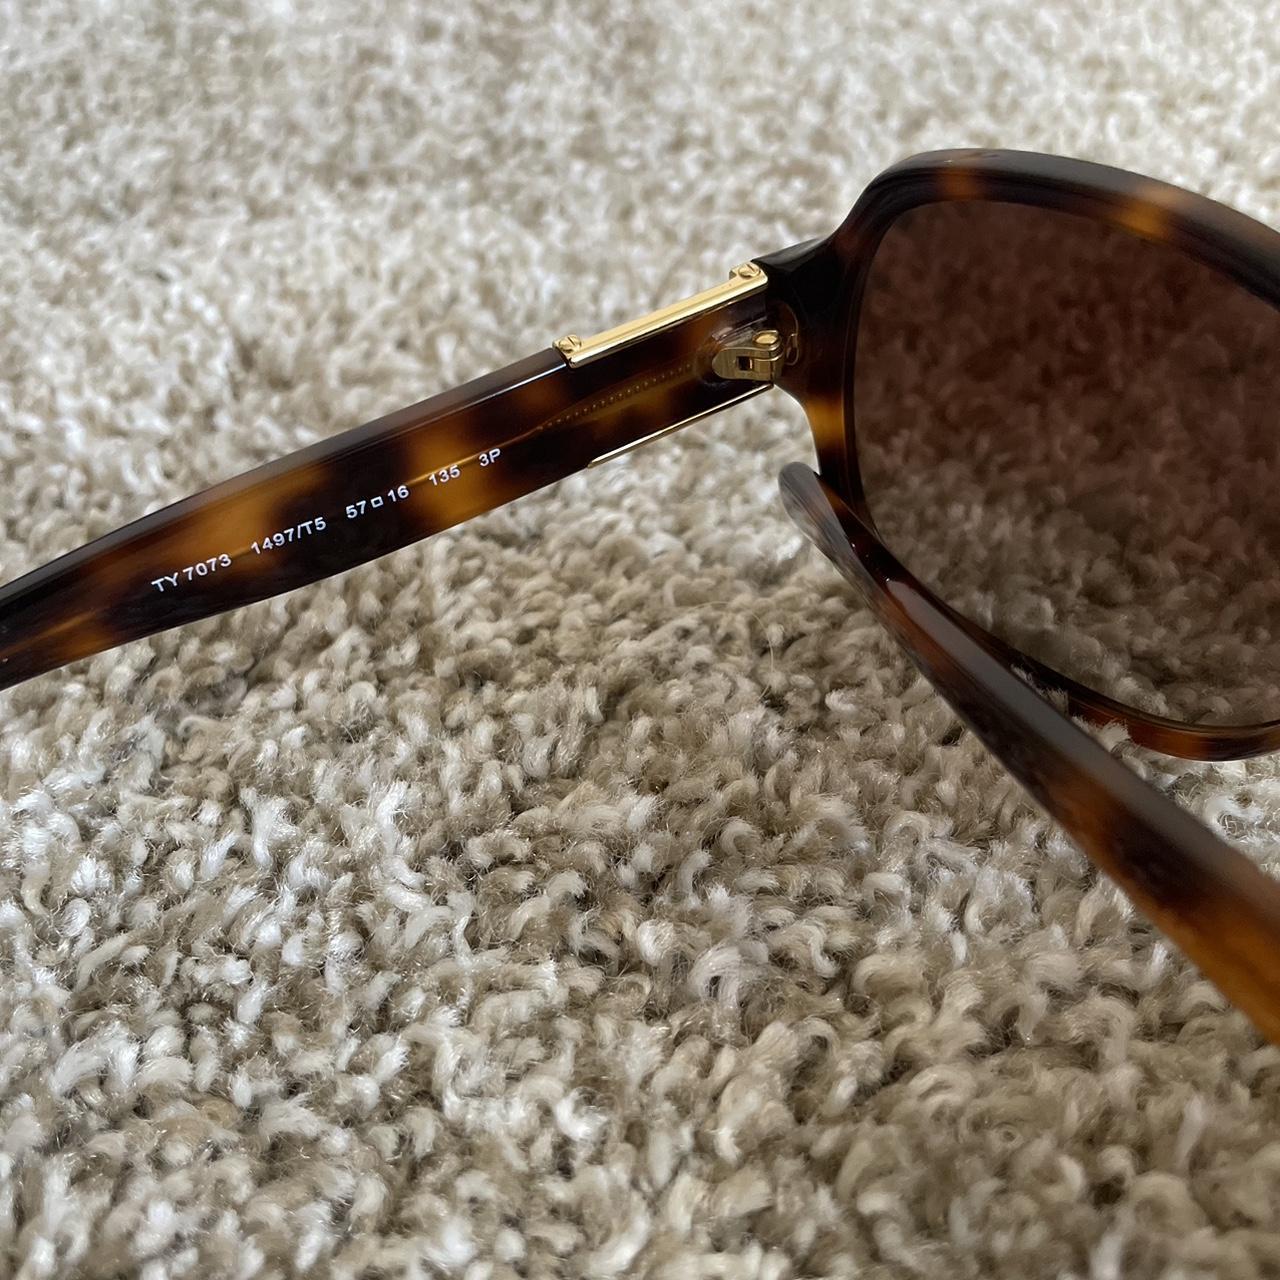 Tory Burch Women's Brown and Gold Sunglasses | Depop